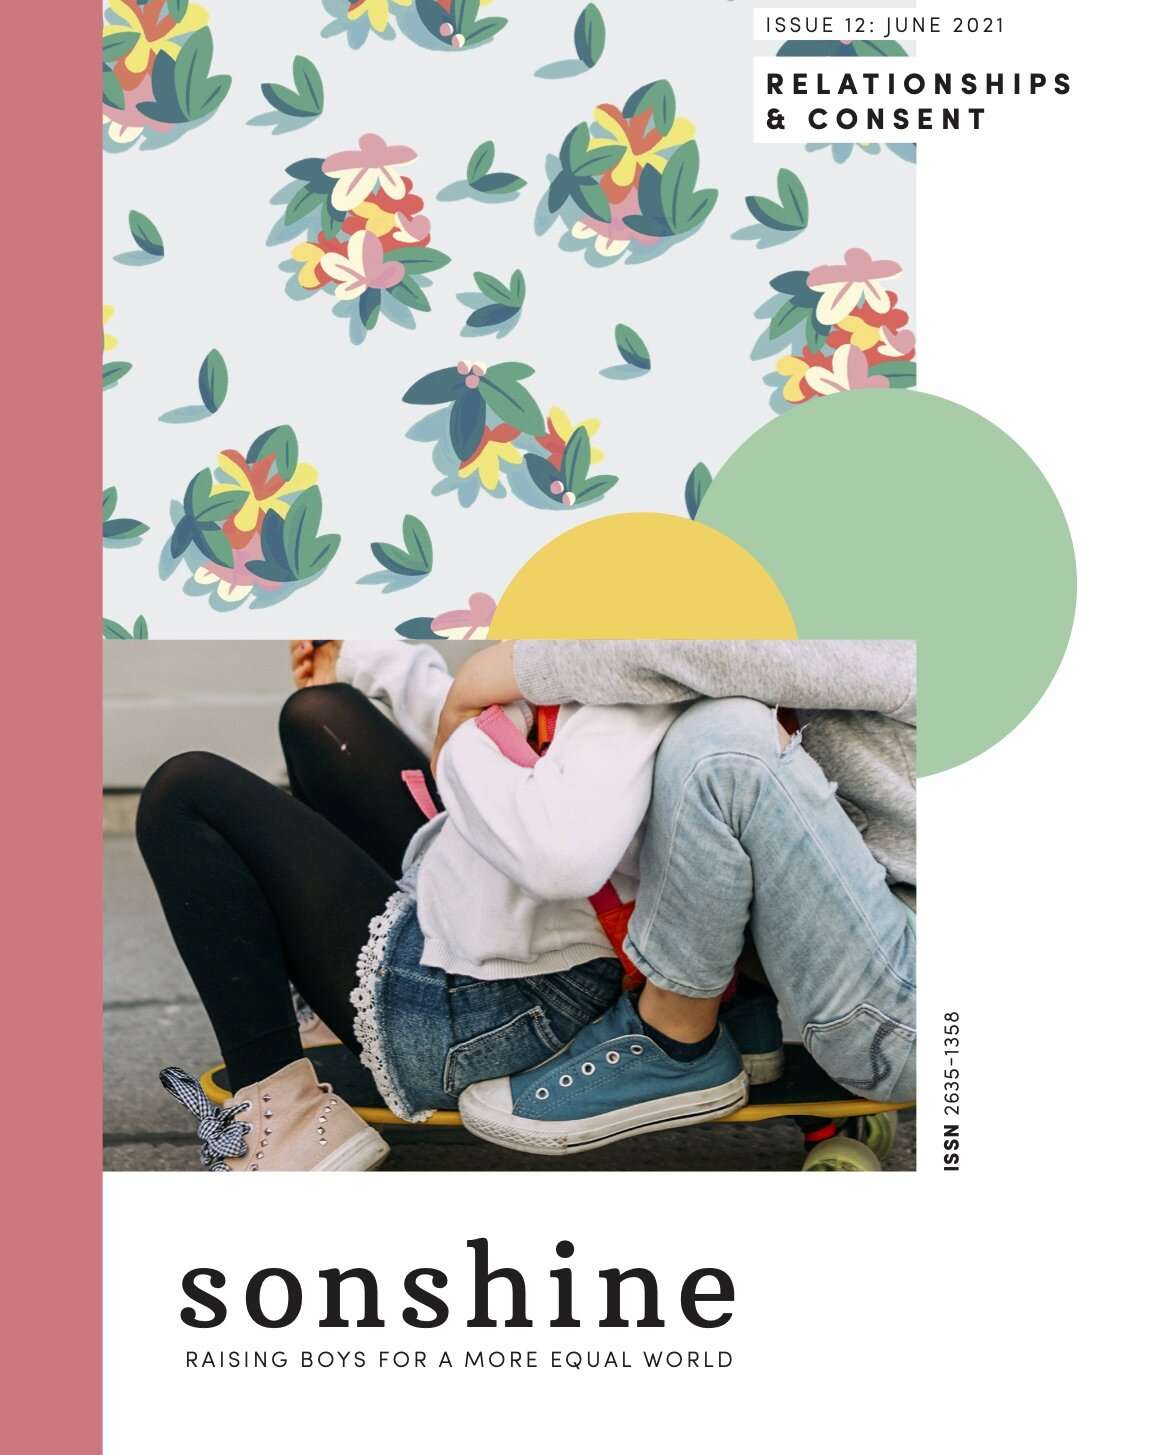 Sonshine Magazine Issue 12: Relationships & Consent